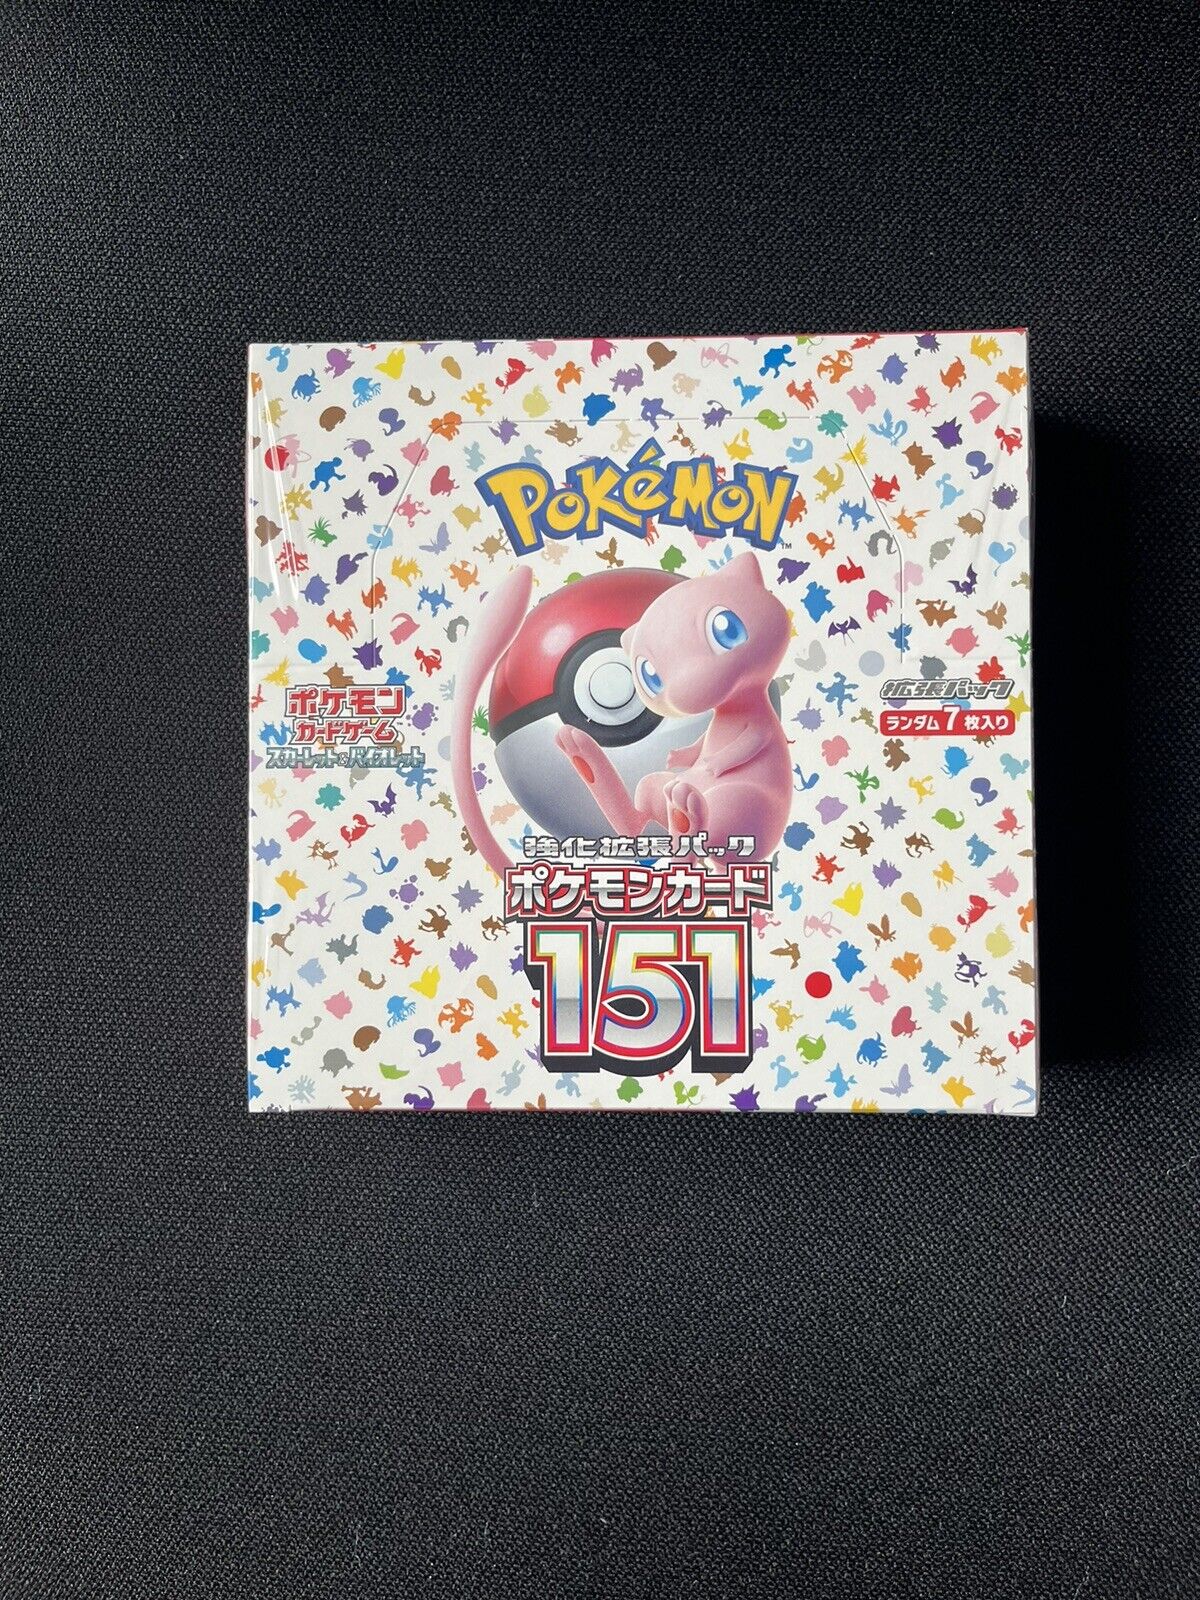 Pokemon 151 Booster Box SV2a Japanese New - Sealed - EU Seller